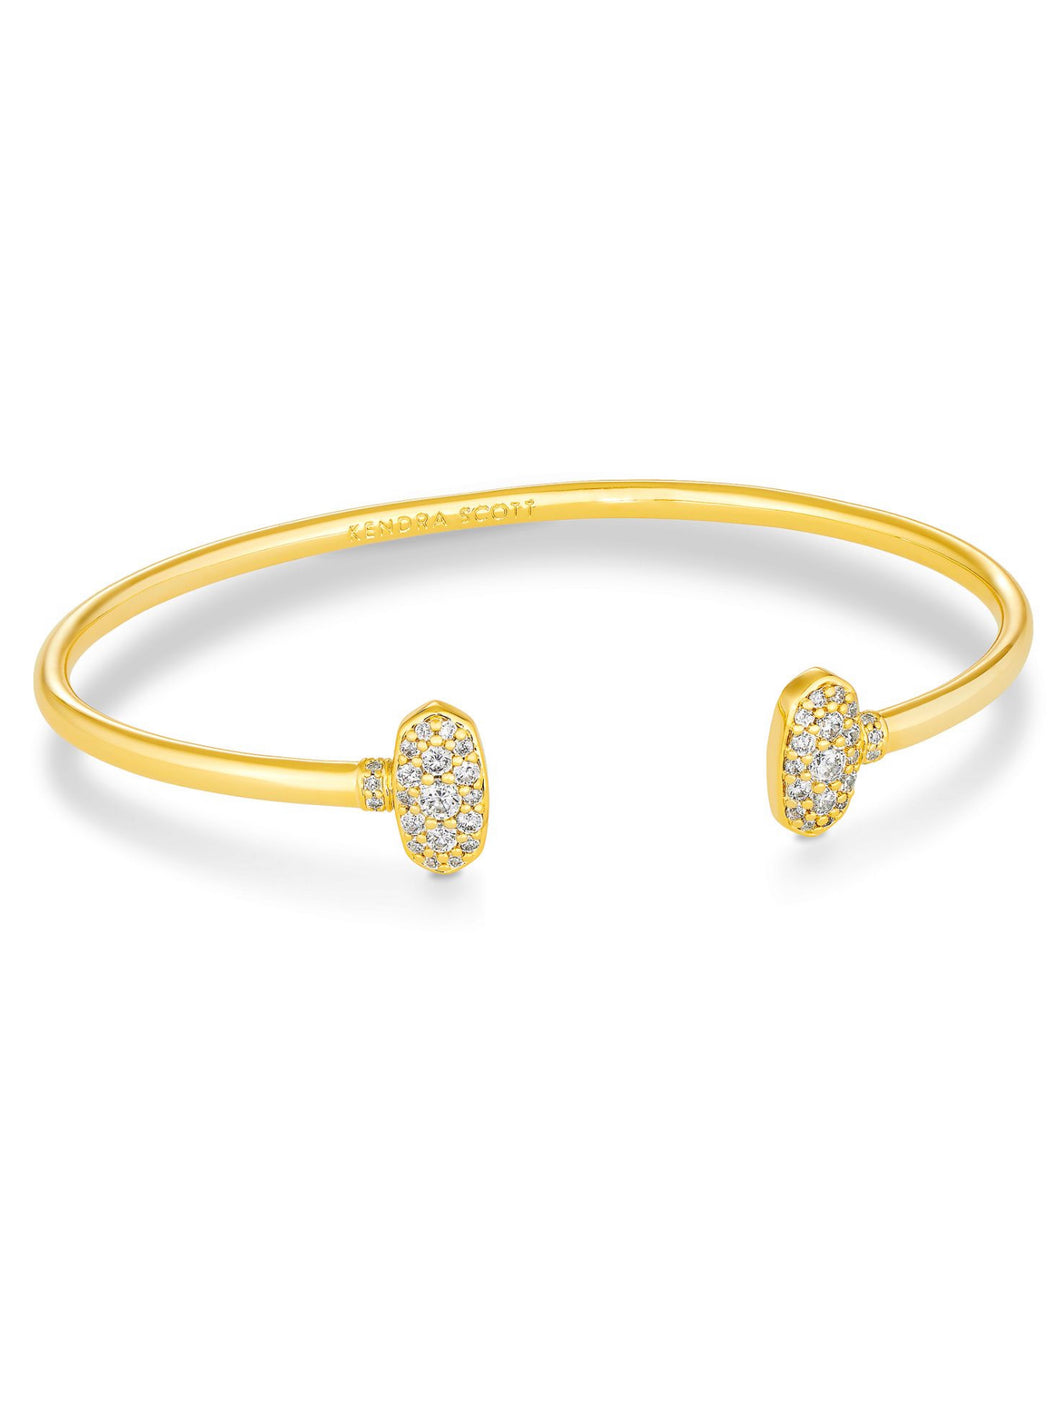 Kendra Scott: Grayson Gold Crystal Cuff Bracelet